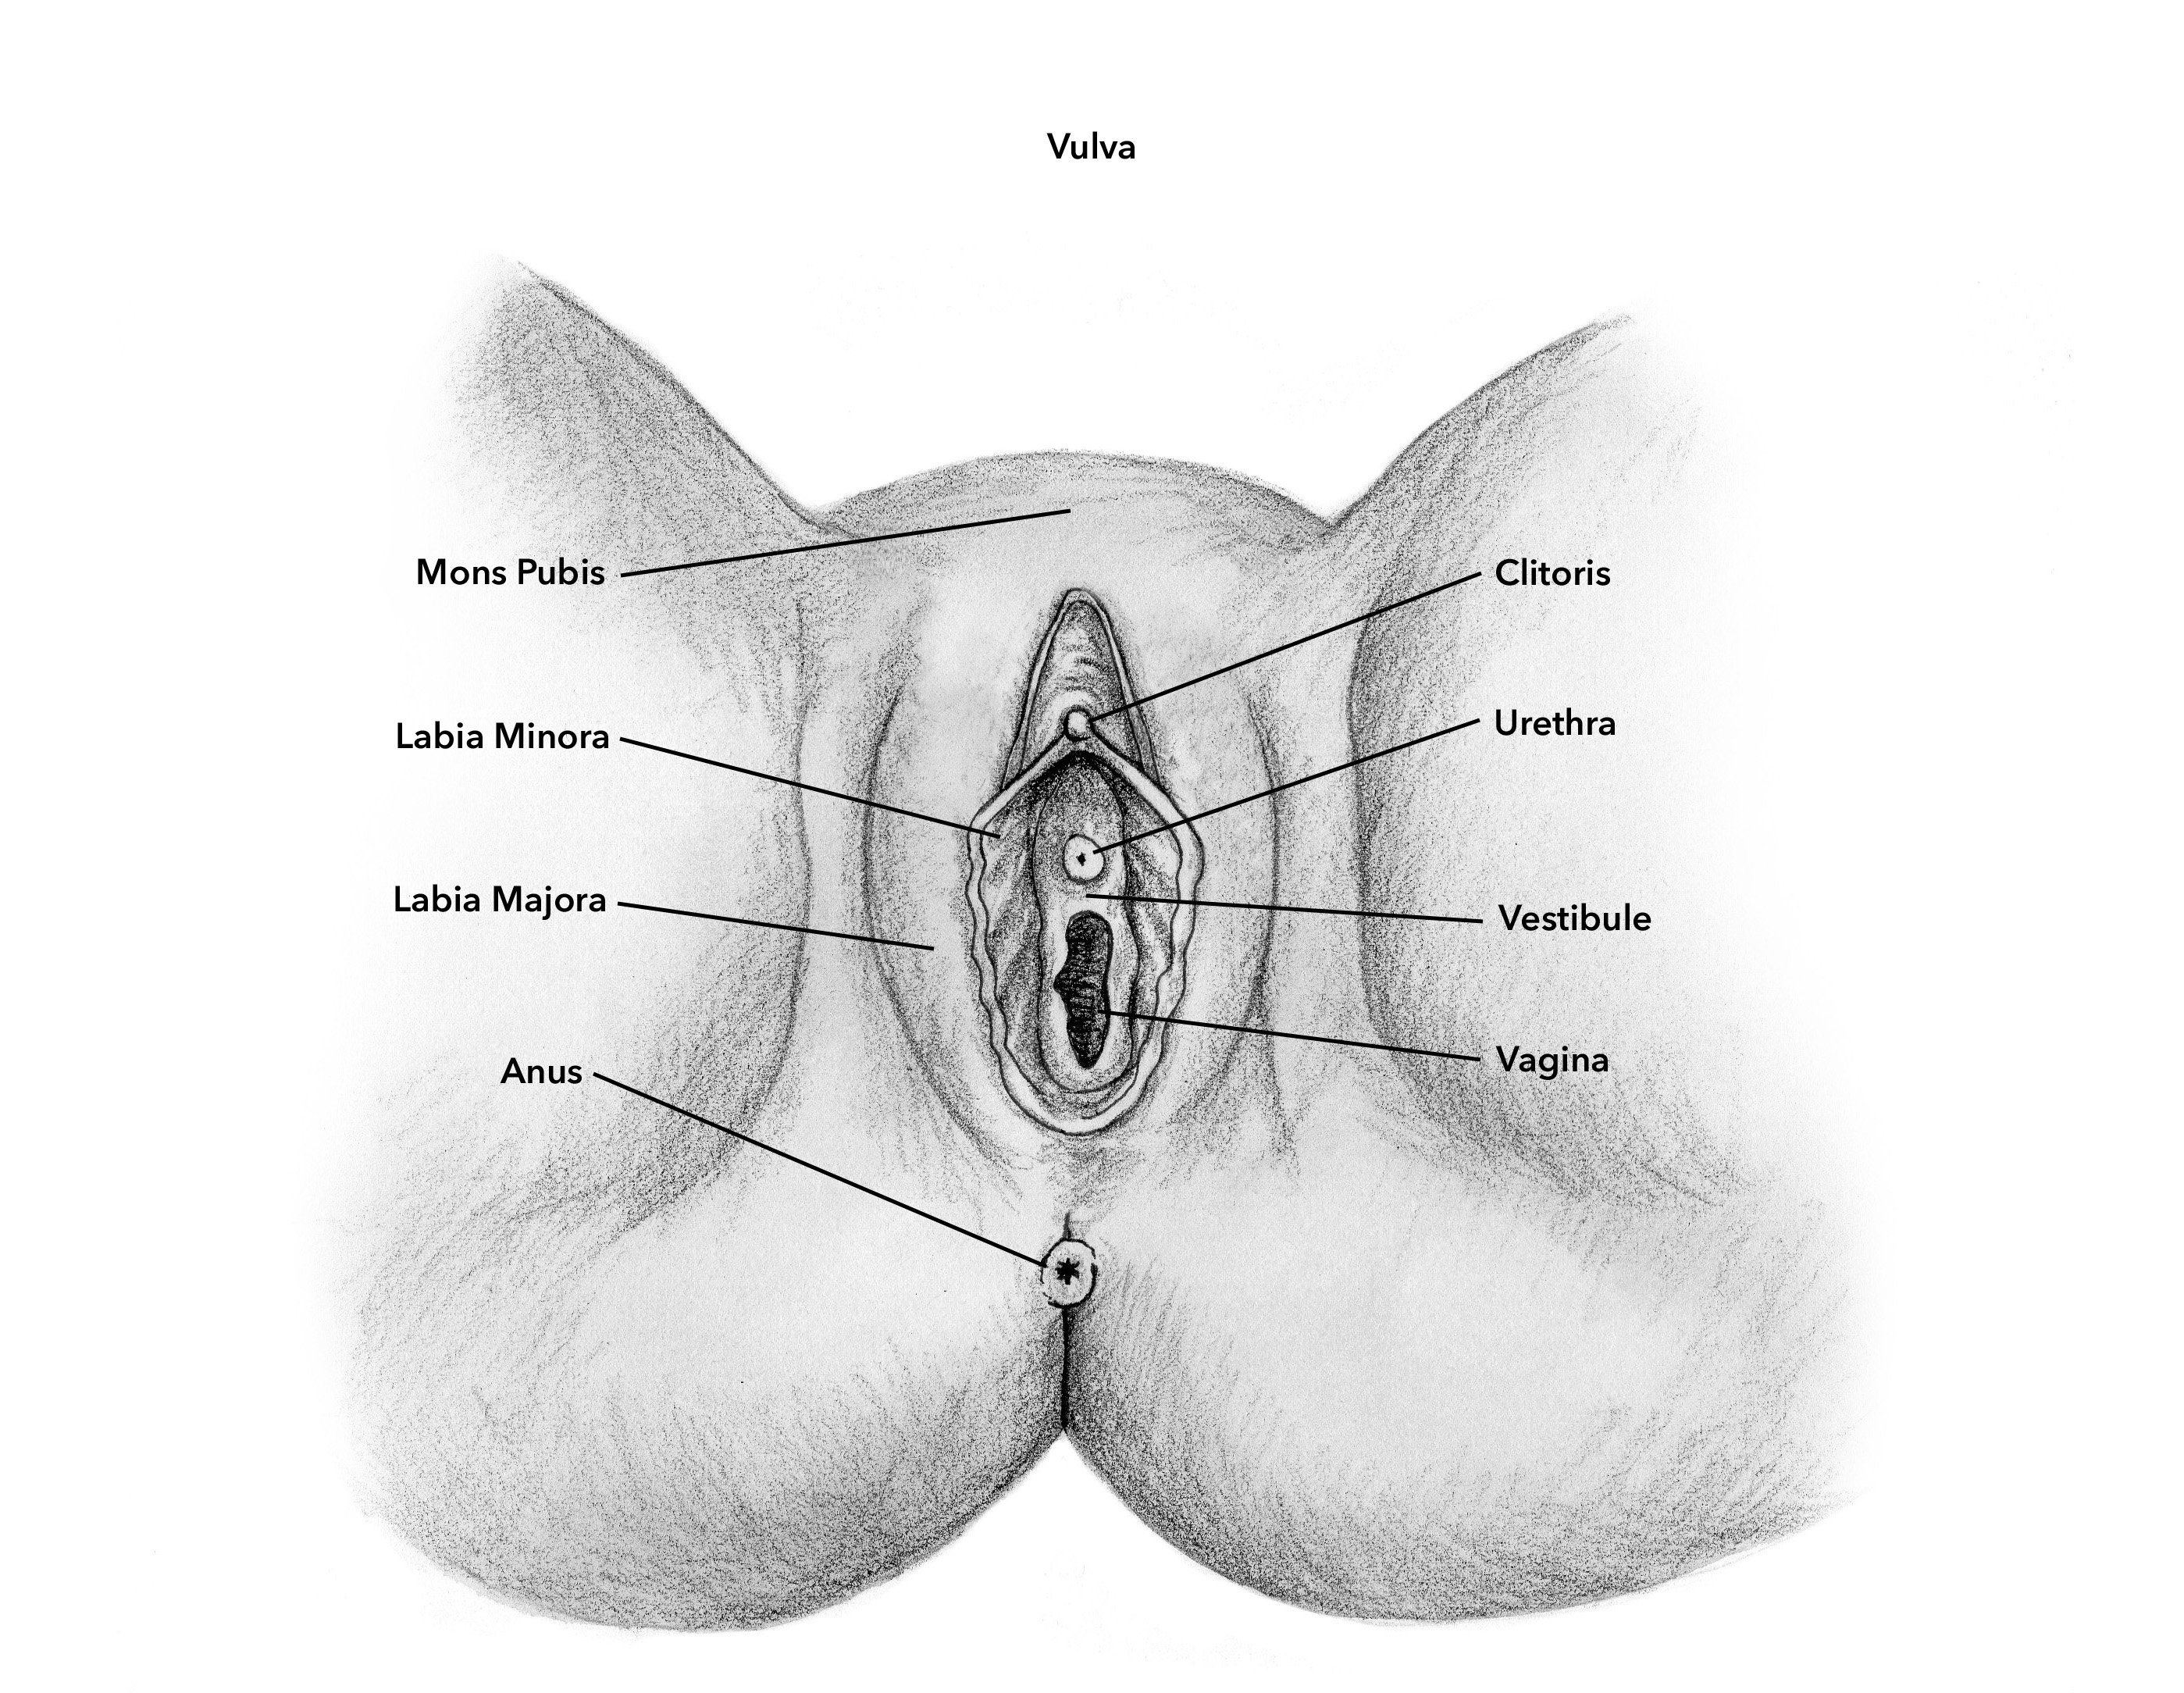 Clitoris medical conditions